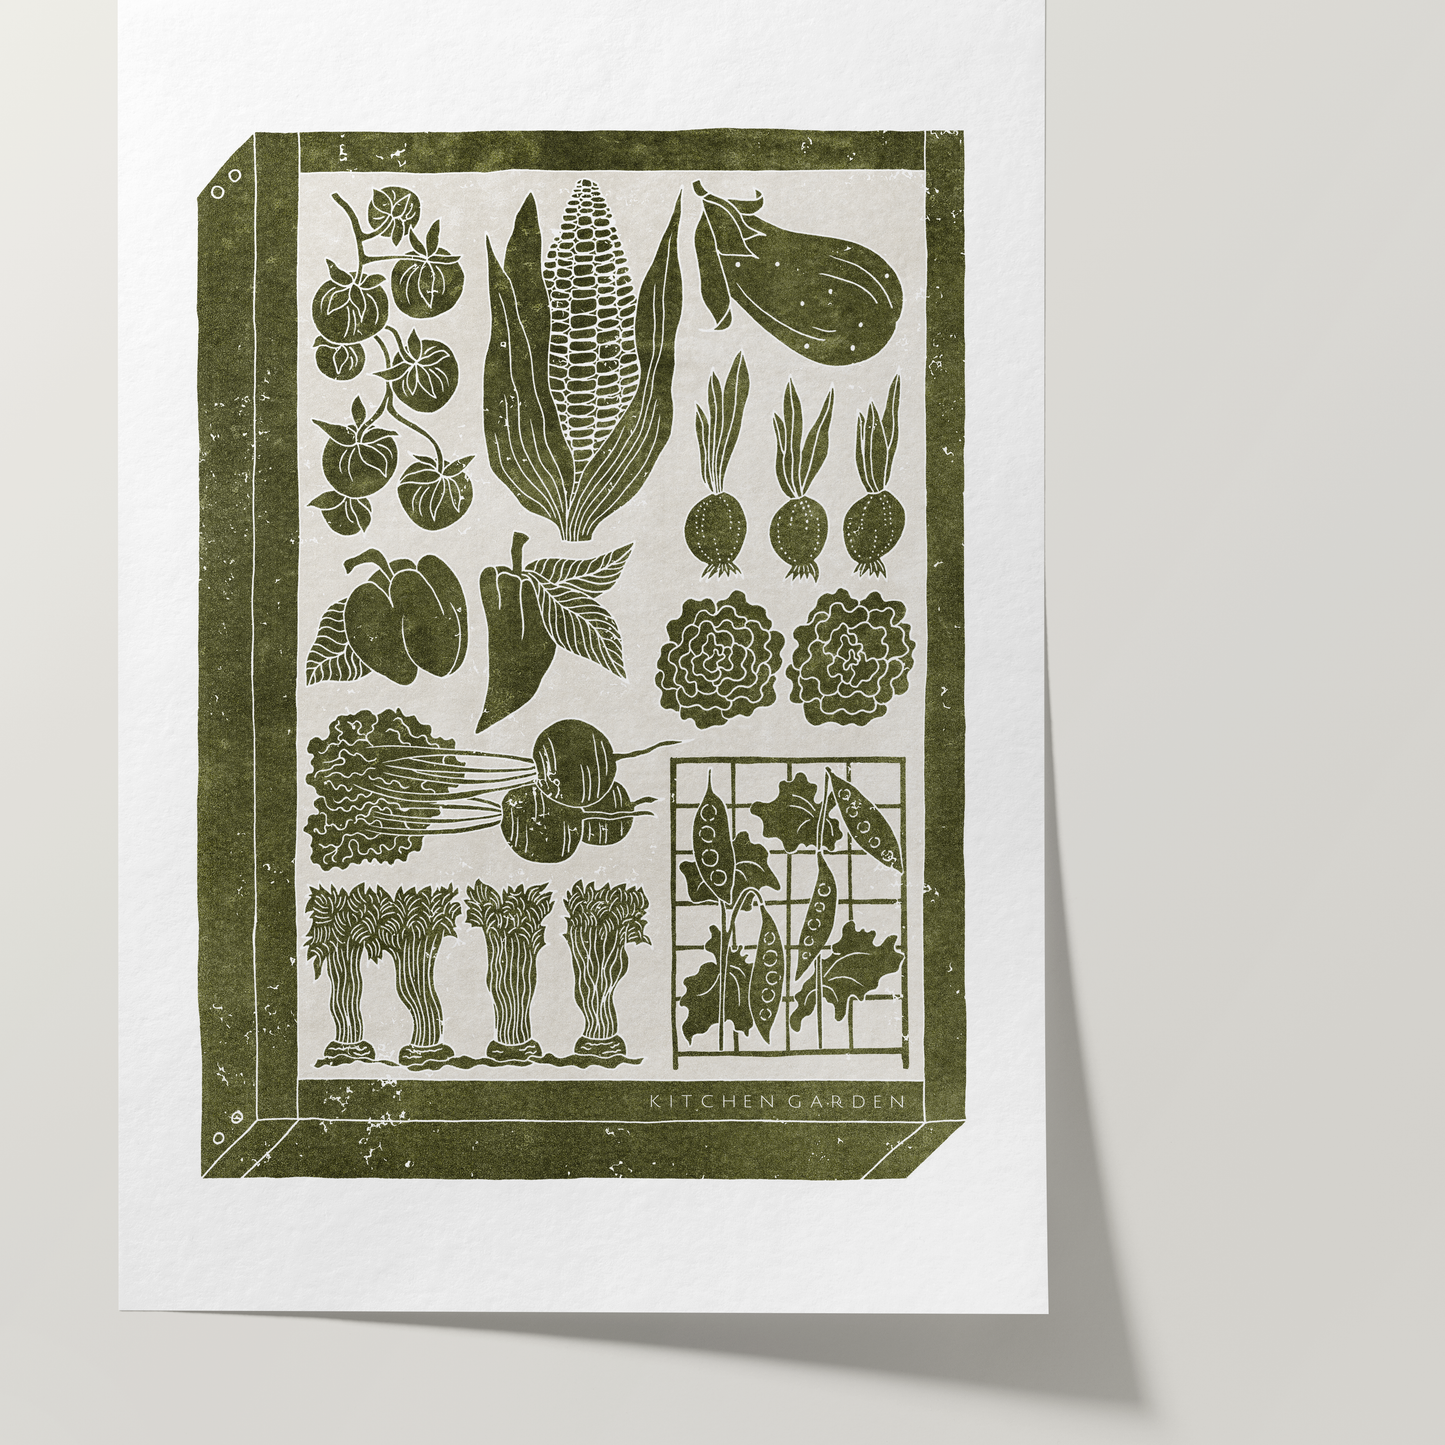 Home Decor Print - Nature-inspired Prints - Kitchen Garden  - Linocut Effect Illustration - Green - Hahnemühle German Etching Paper